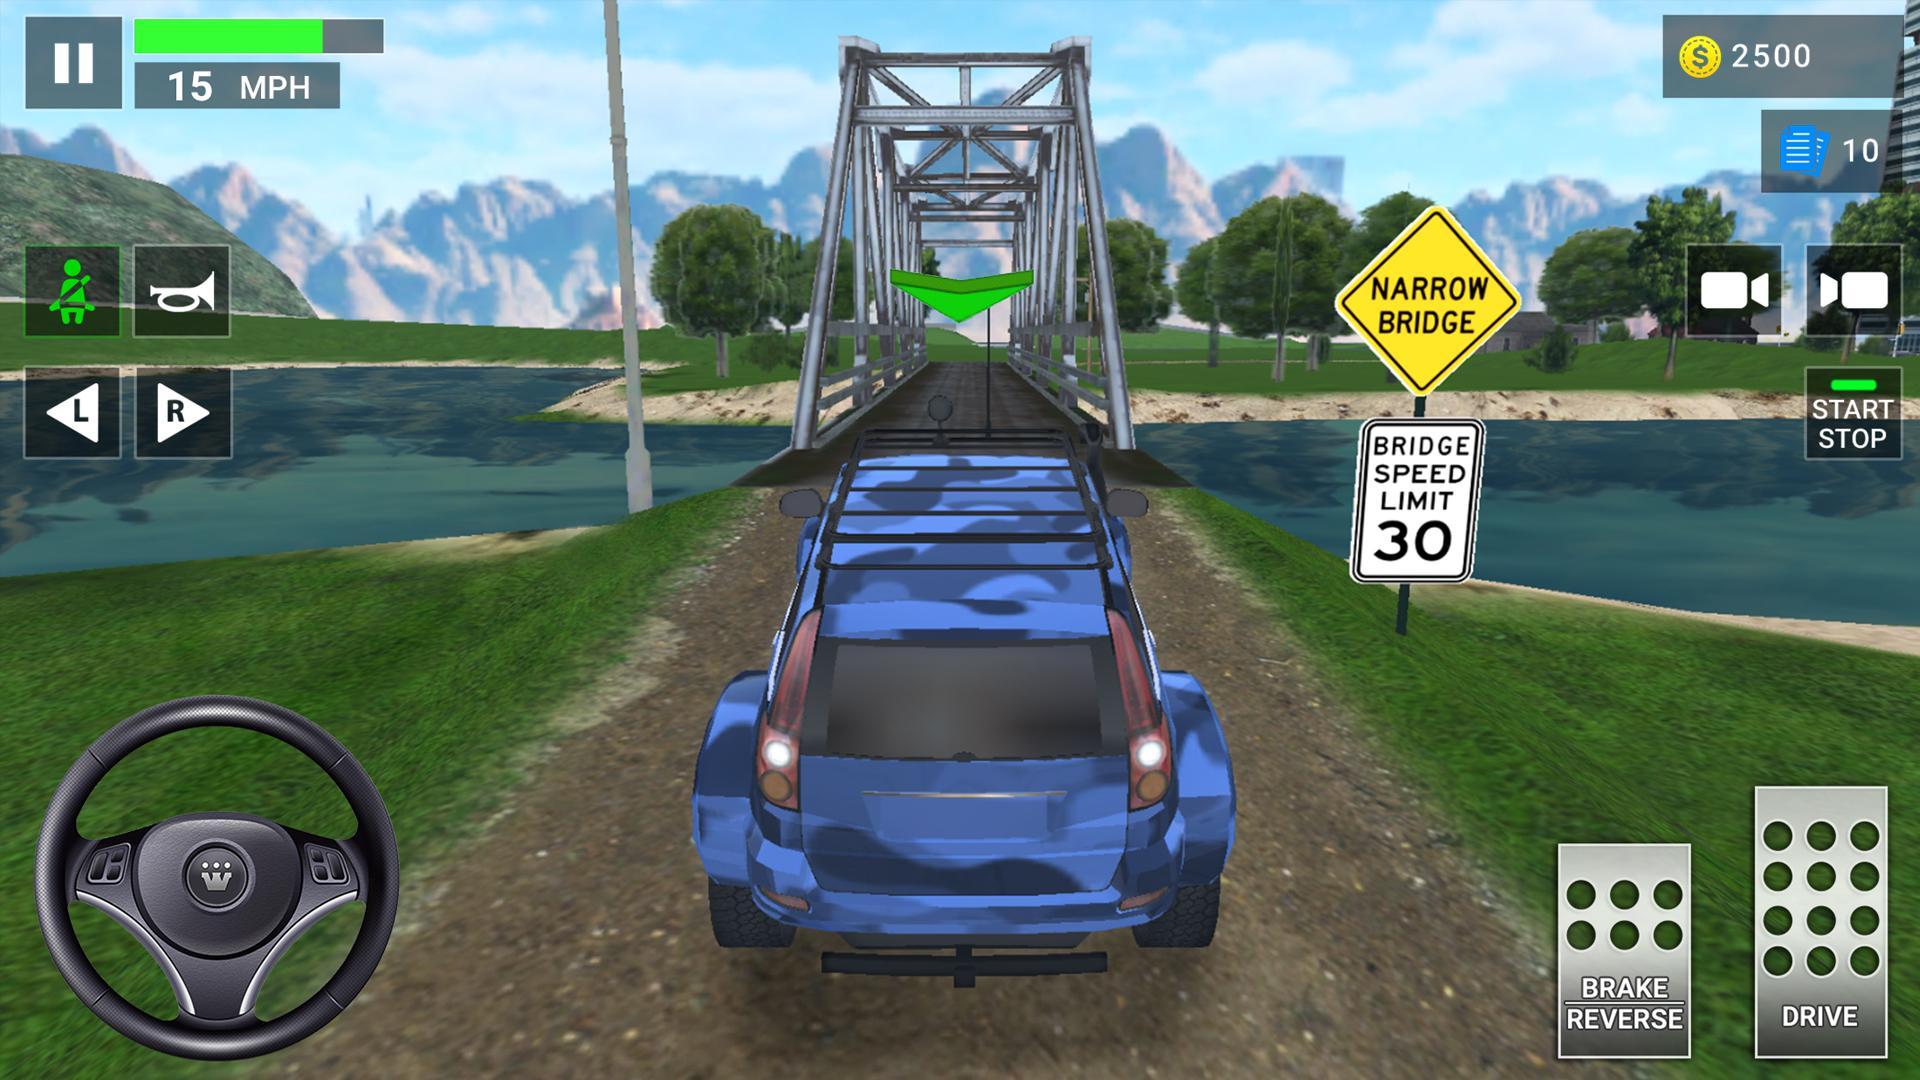 Driving Academy 2 Car Games & Driving School 2021 2.1 Screenshot 6